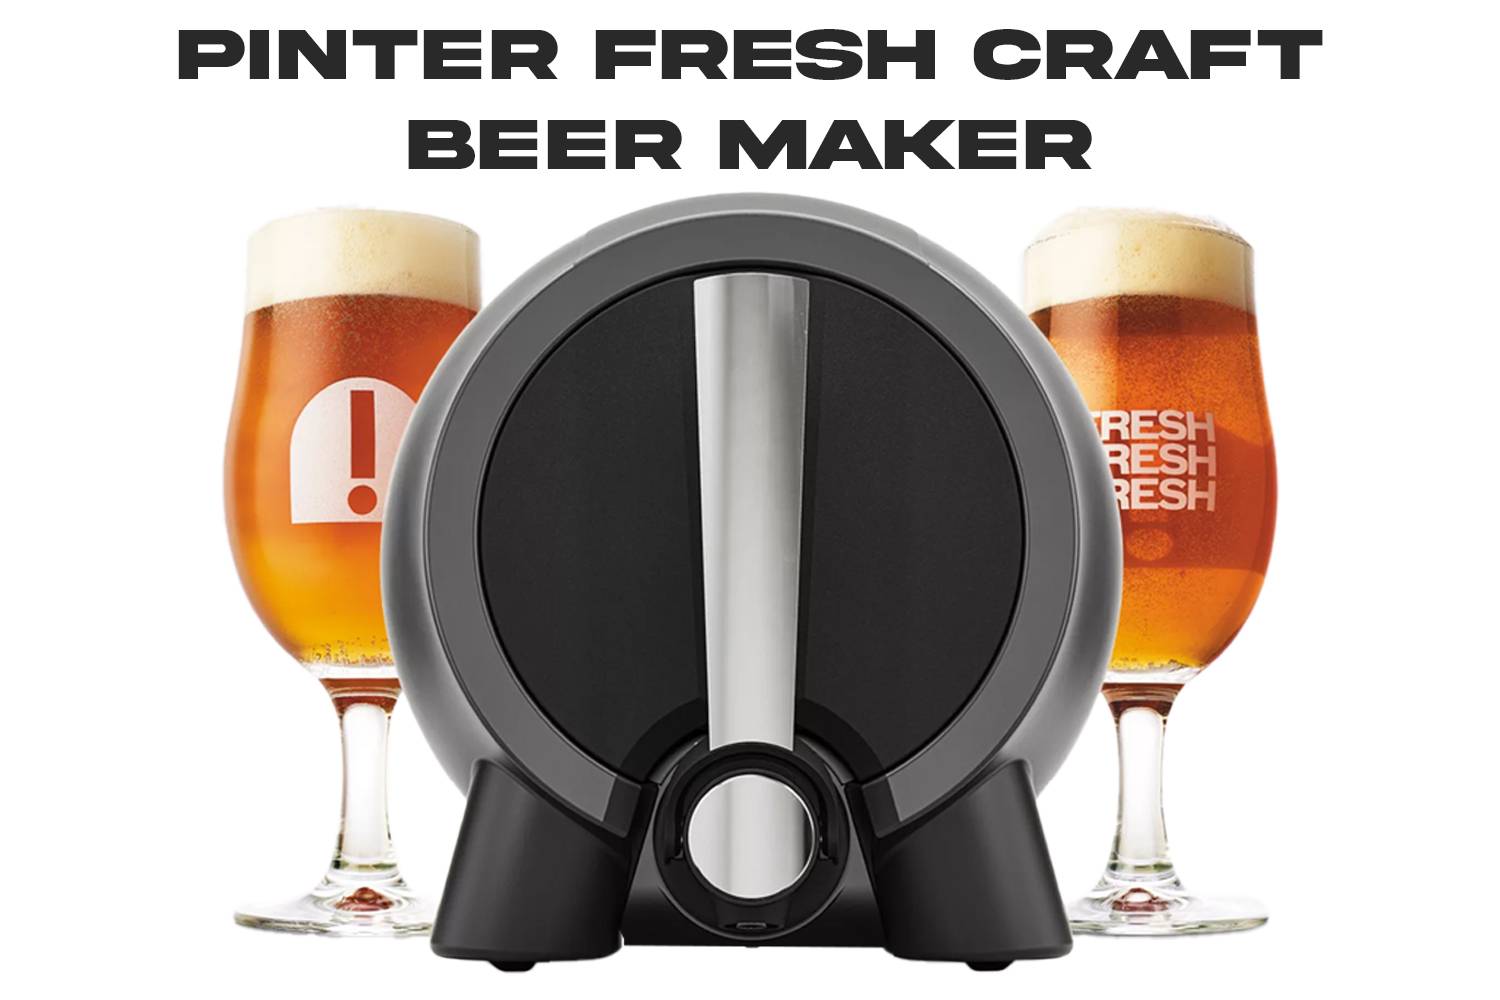 Pinter Fresh Craft Beer Maker